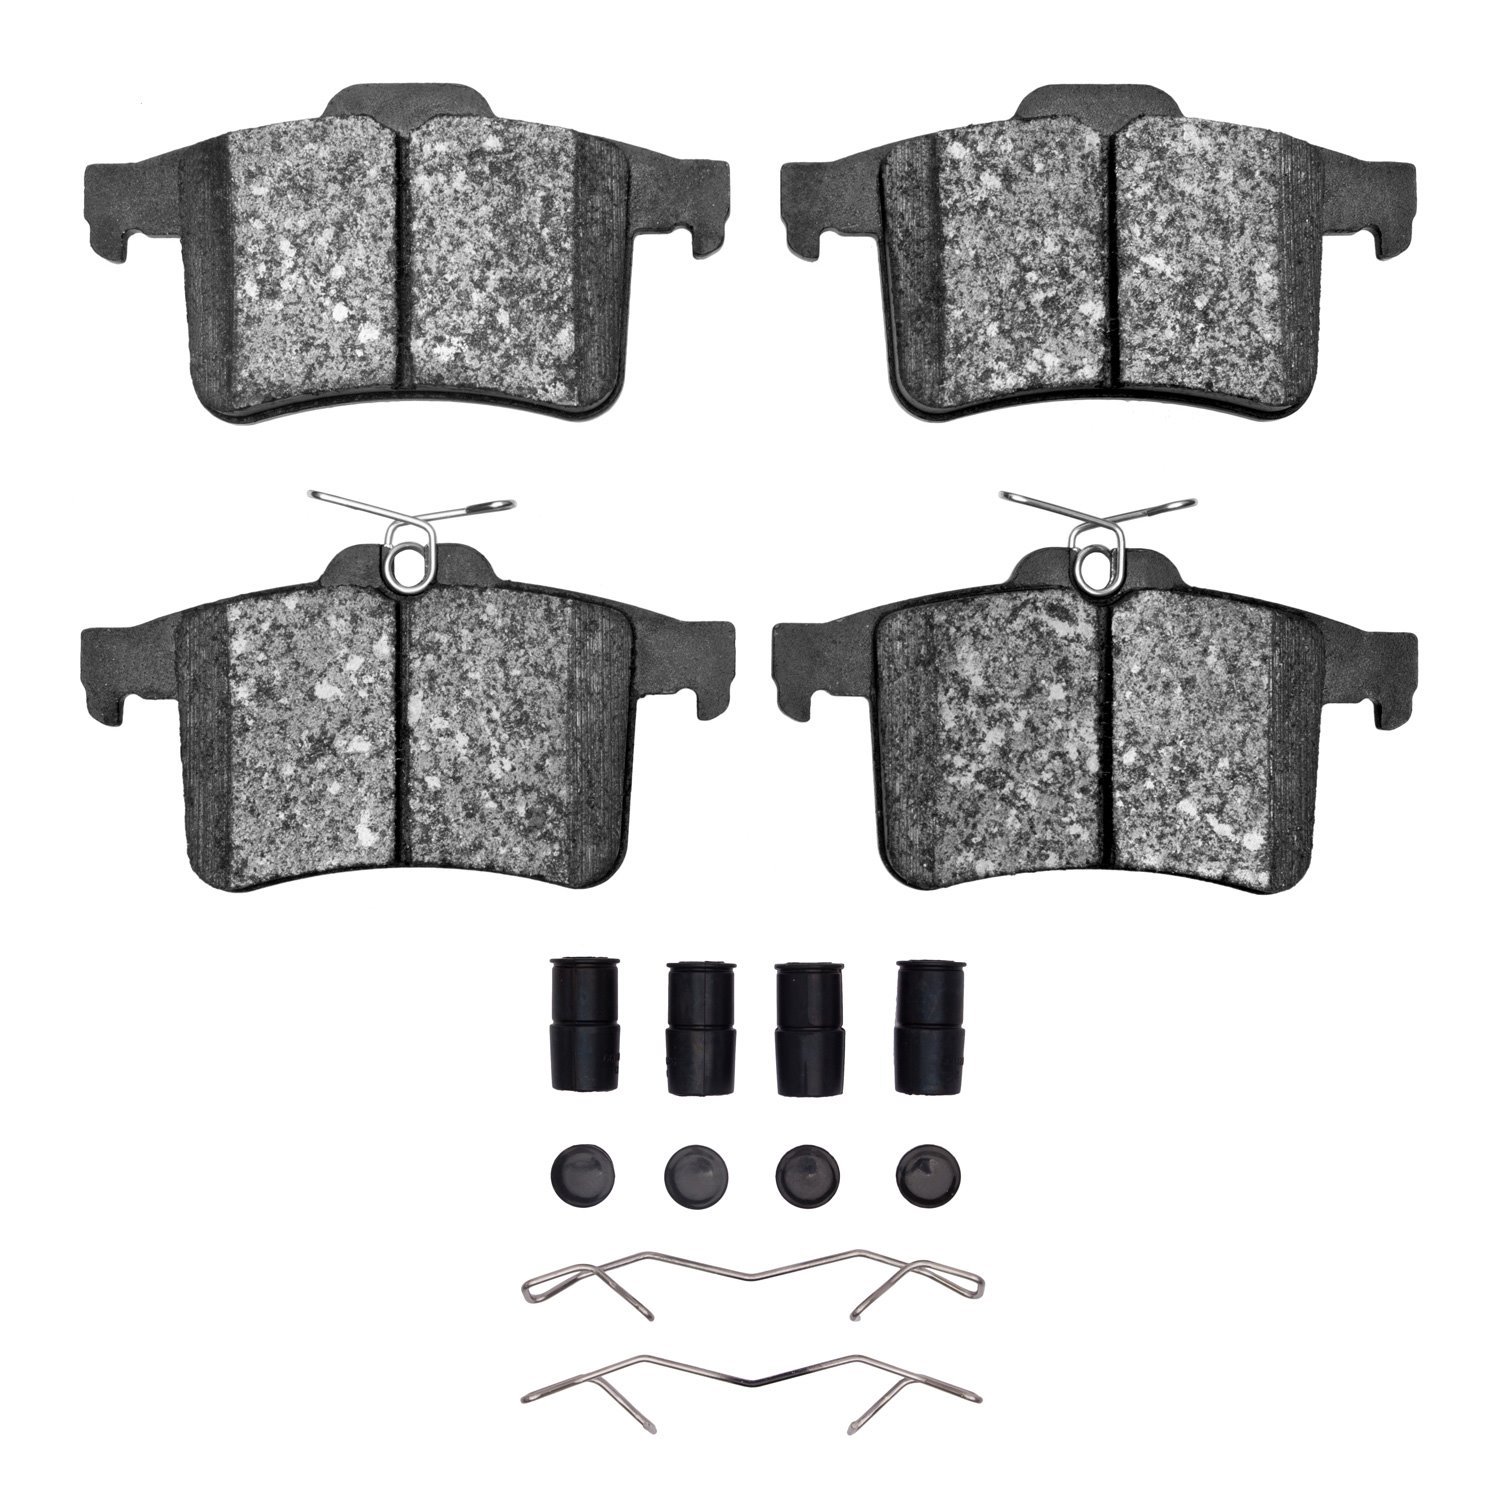 1600-1449-02 5000 Euro Ceramic Brake Pads & Hardware Kit, 2010-2015 Jaguar, Position: Rear